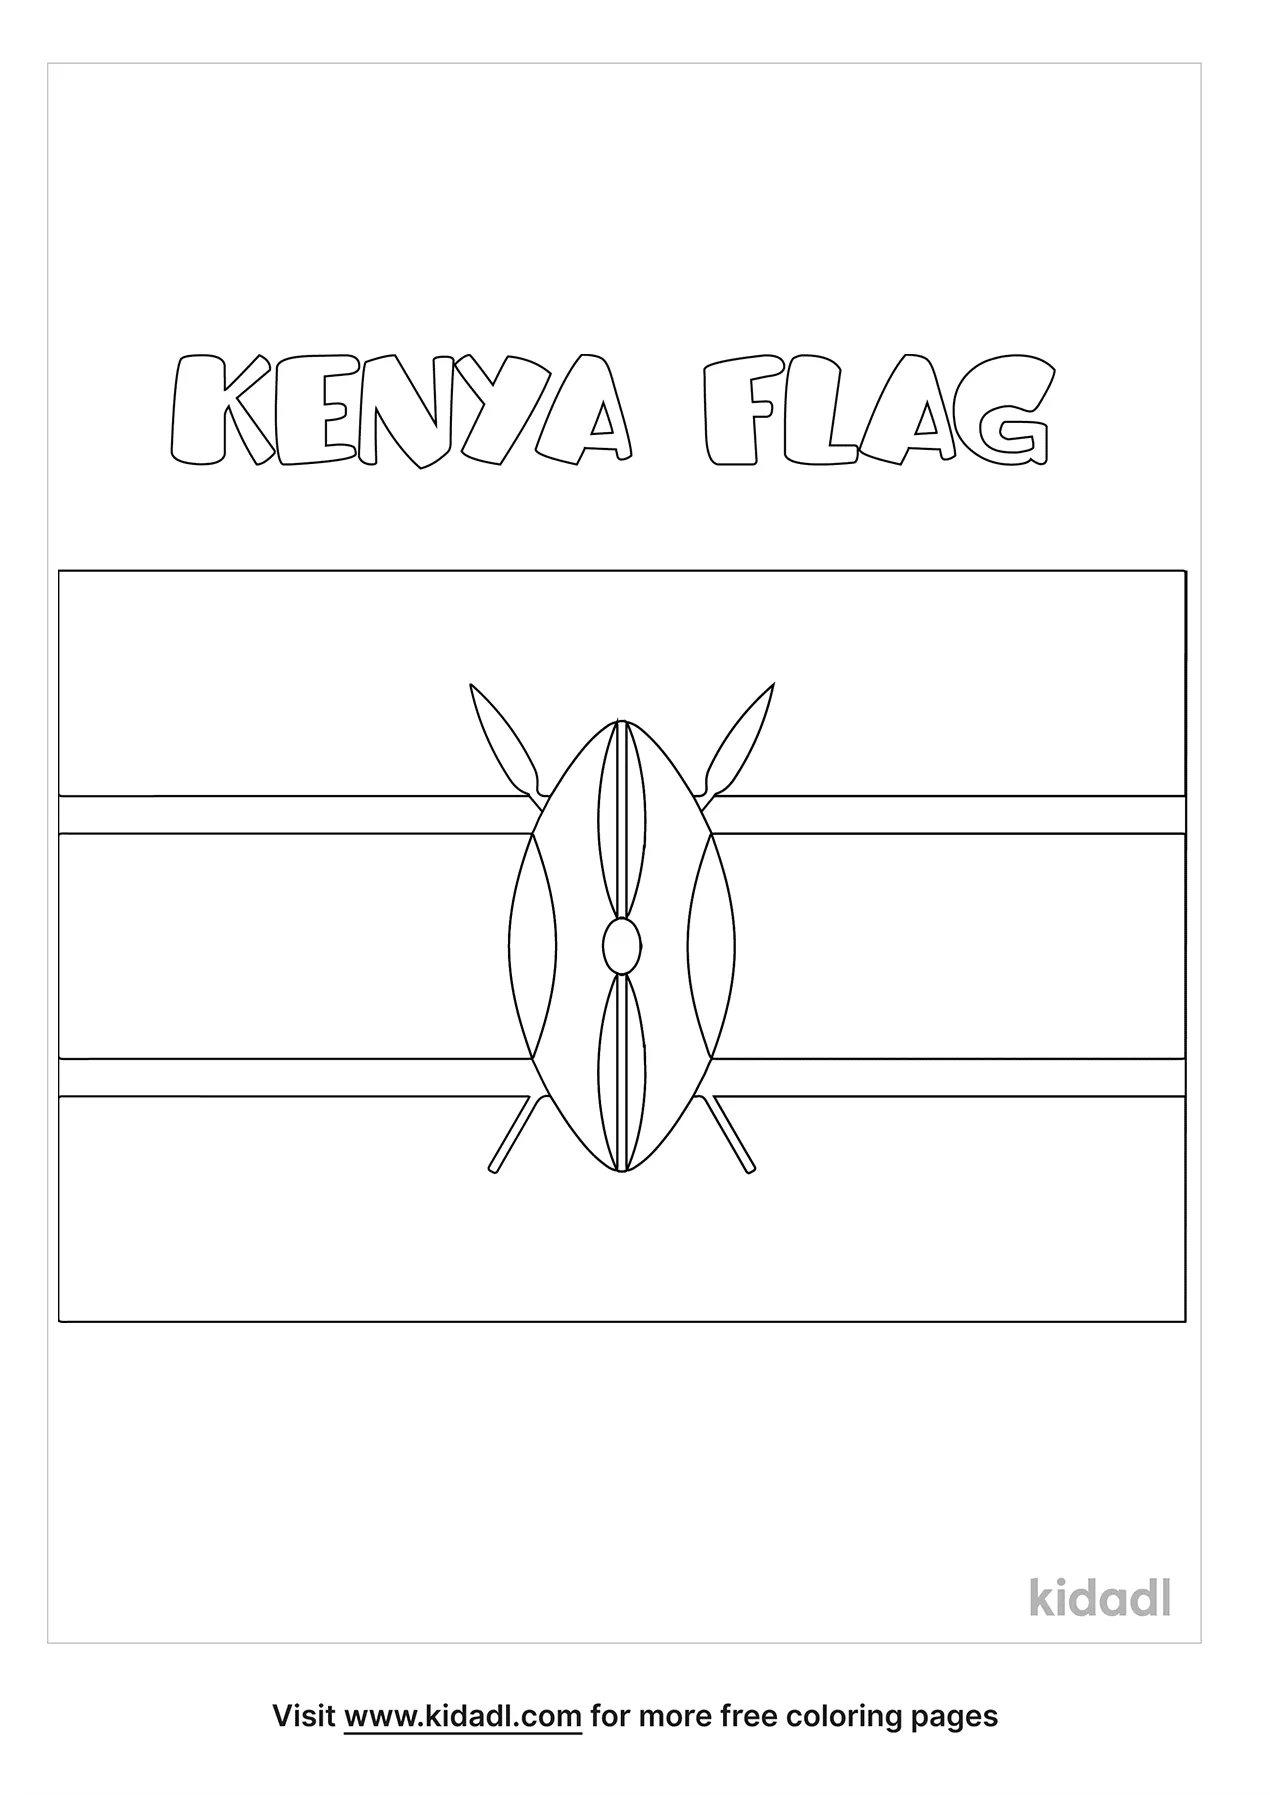 Free kenyan flag coloring page coloring page printables